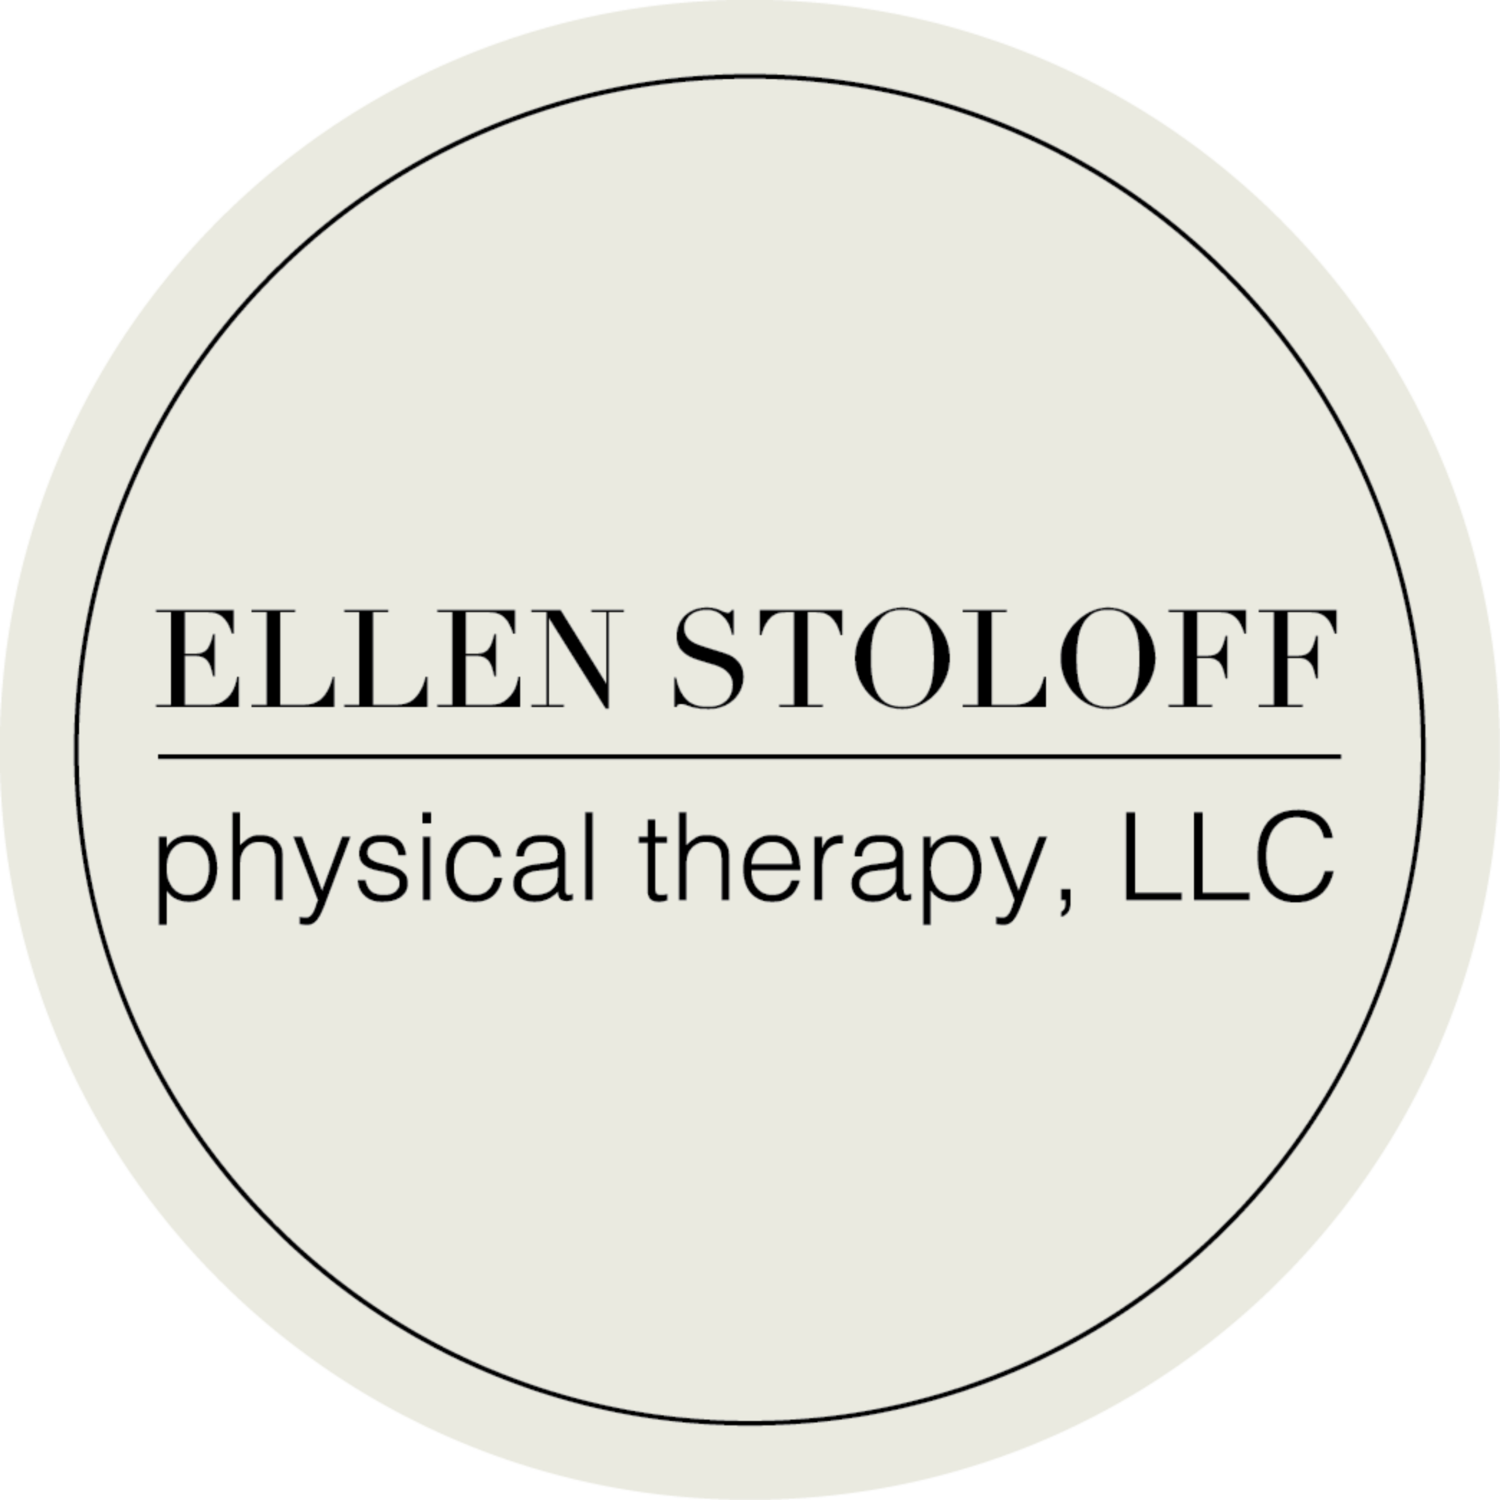 Ellen Stoloff Physical Therapy, LLC